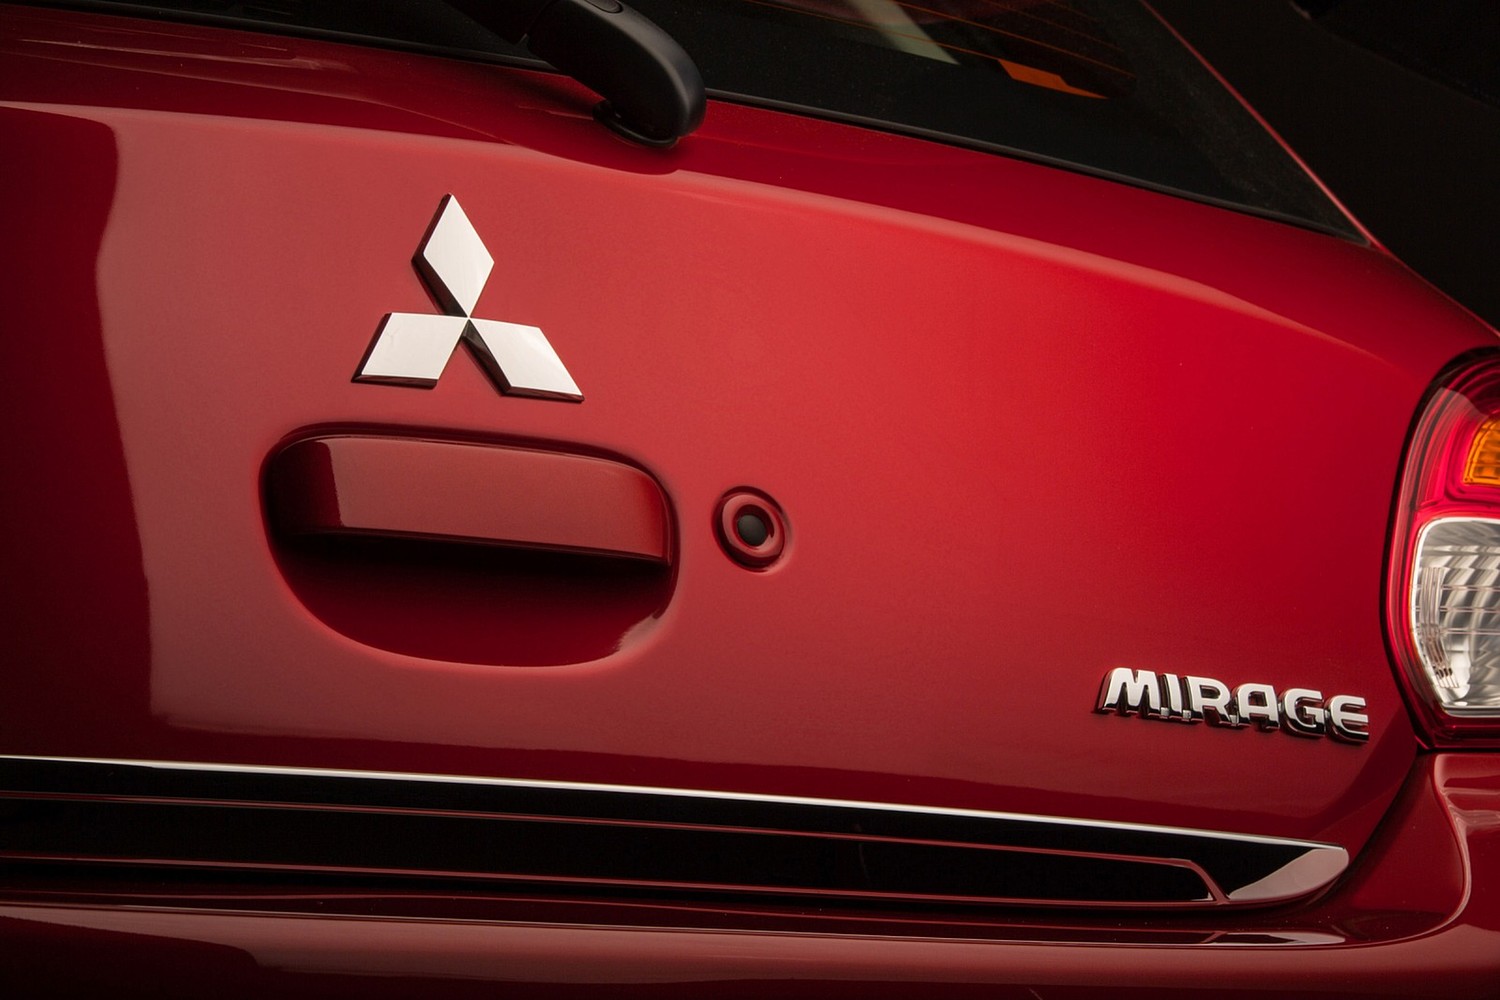 Mitsubishi Mirage ES 4dr Hatchback Rear Badge (2014 model year shown)